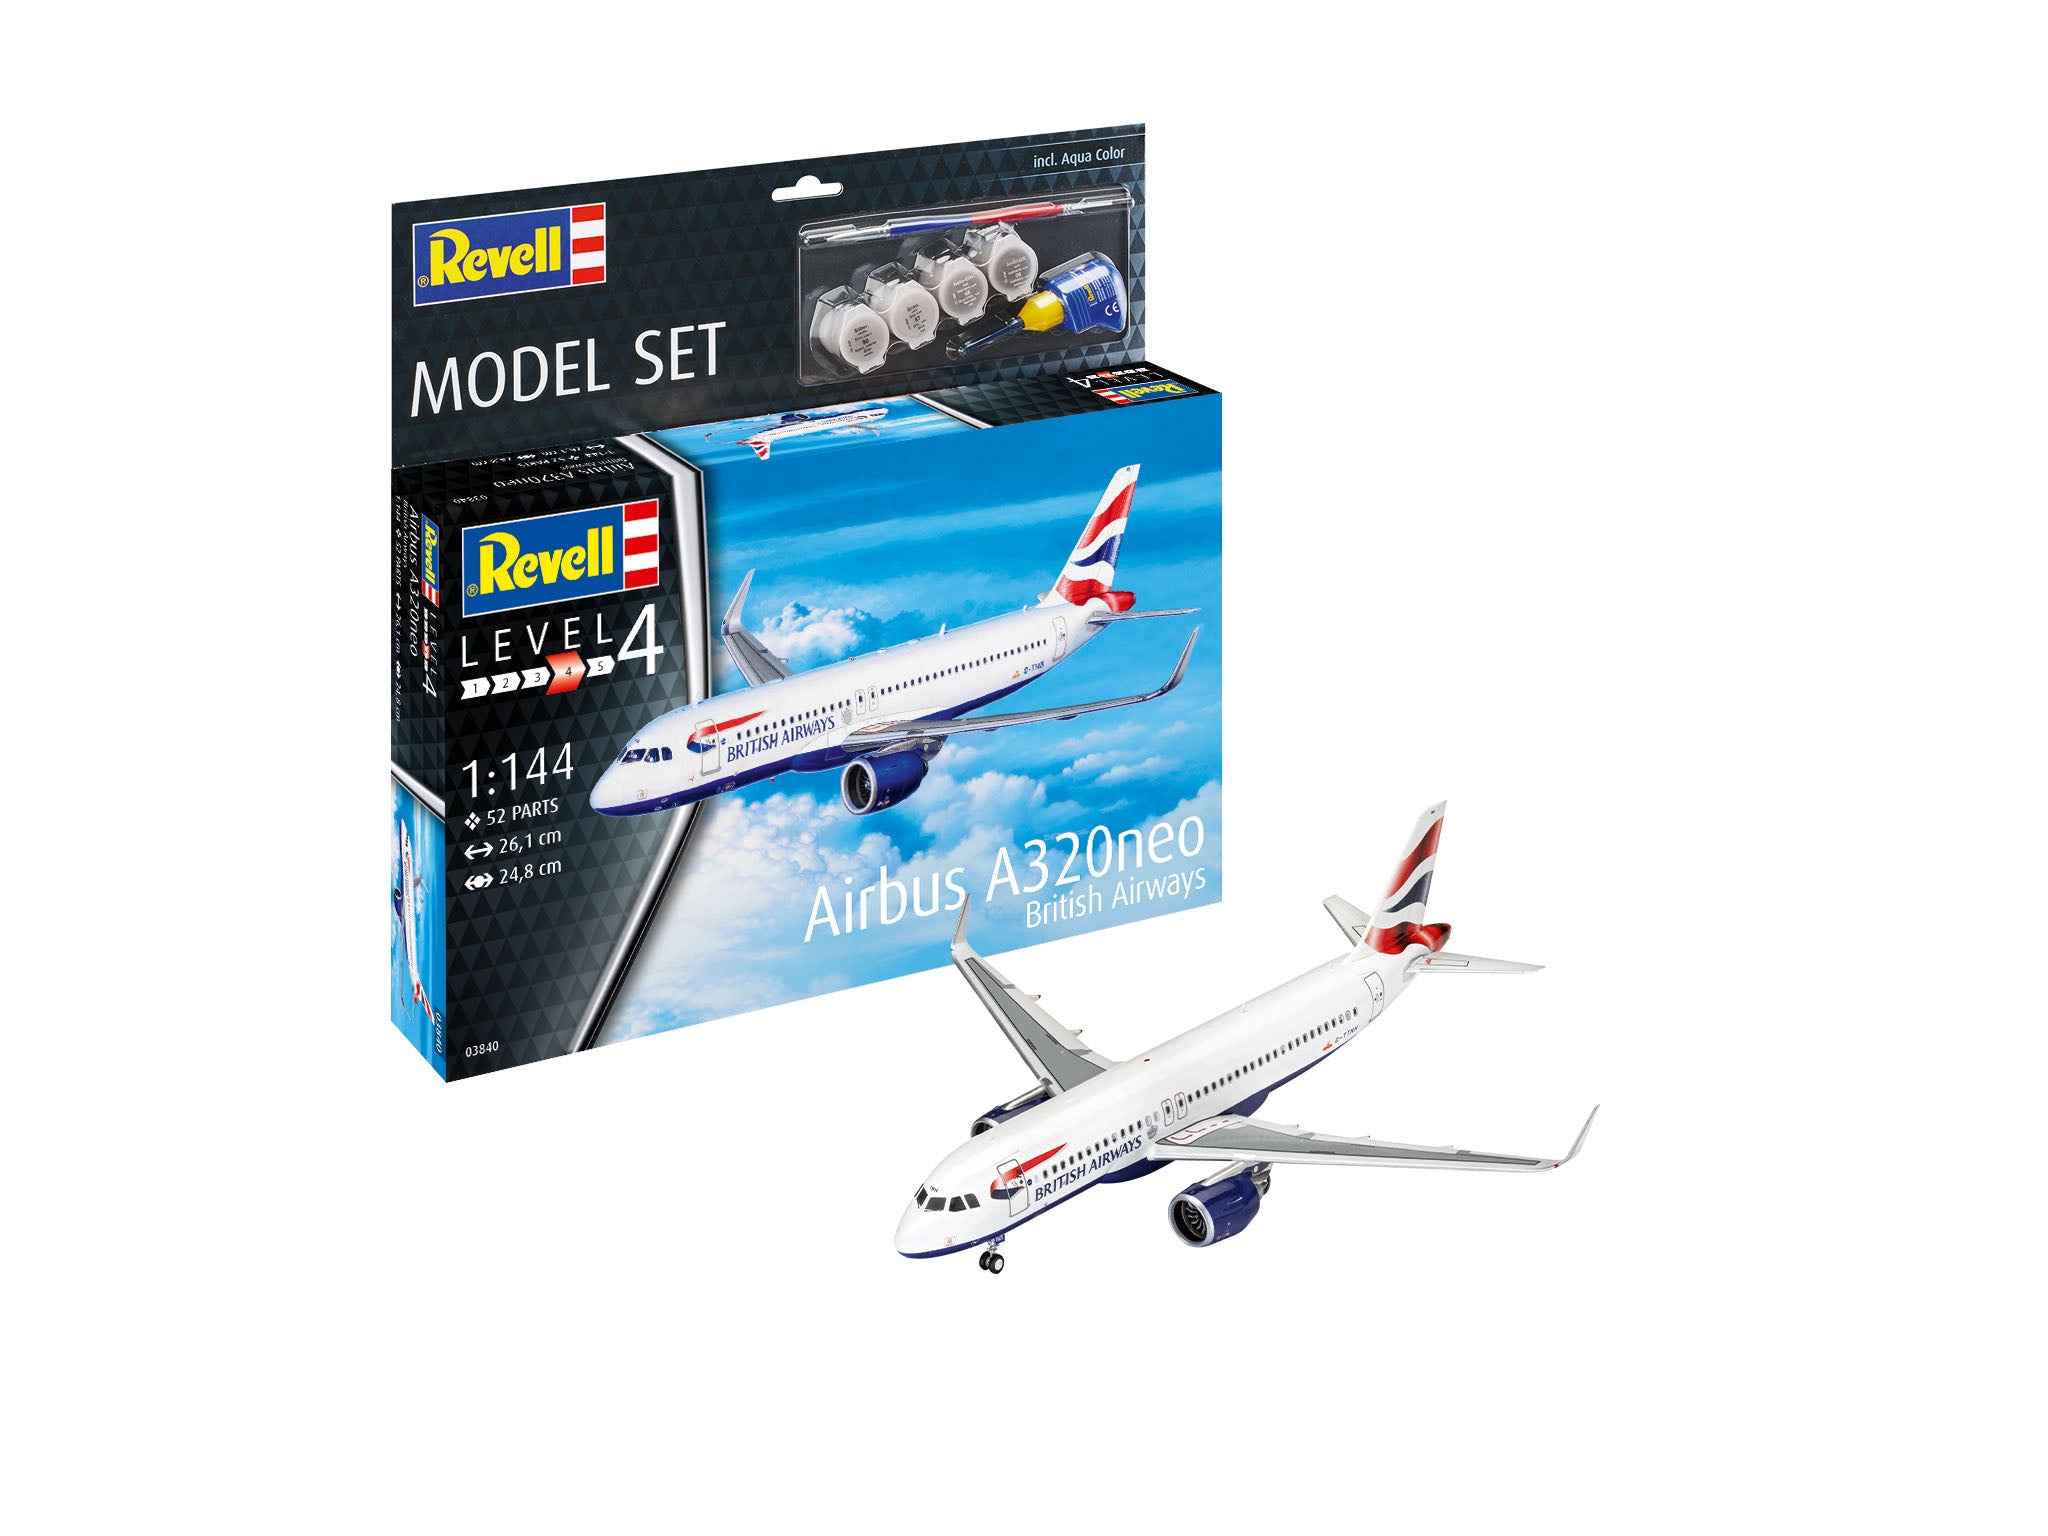 Plane Model Kit Revell Model Set Airbus A320 neo British Airways 1:144